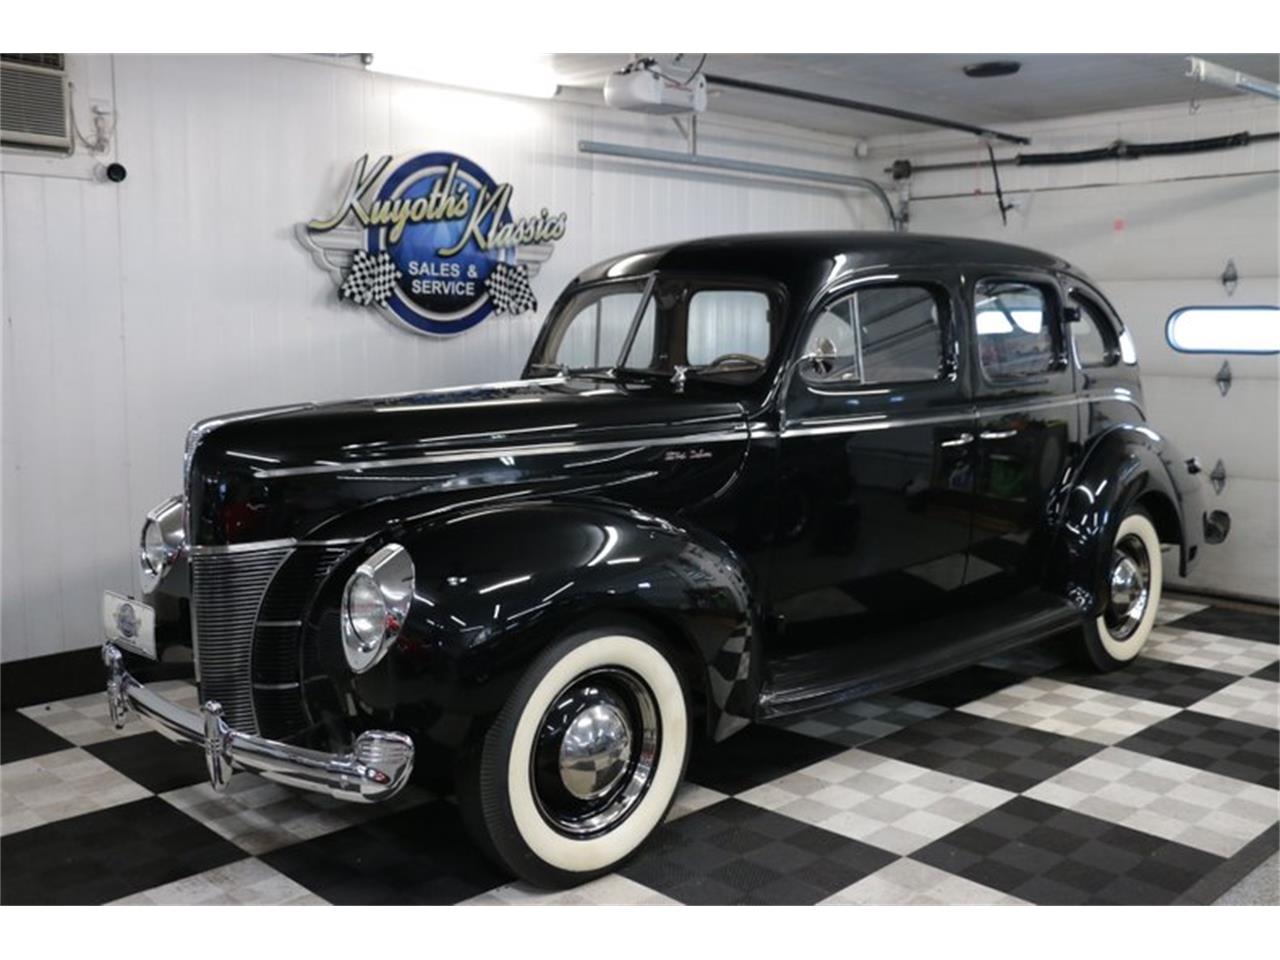 For Sale: 1940 Ford Custom in Stratford, Wisconsin for sale in Stratford, WI